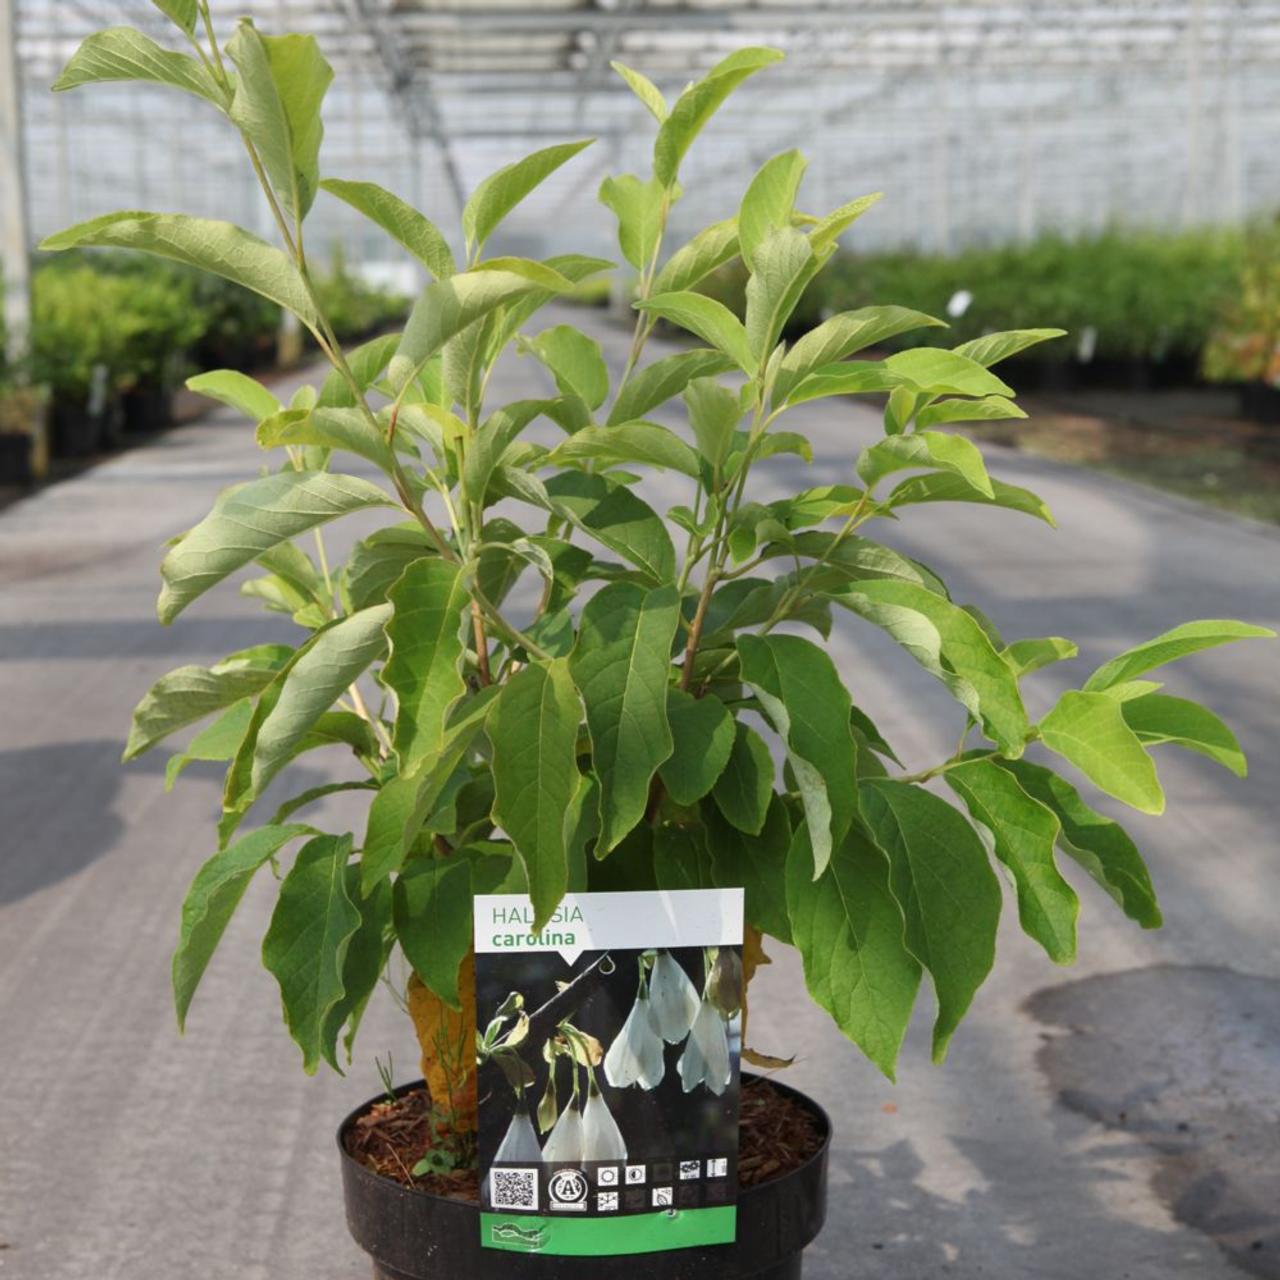 Halesia carolina plant